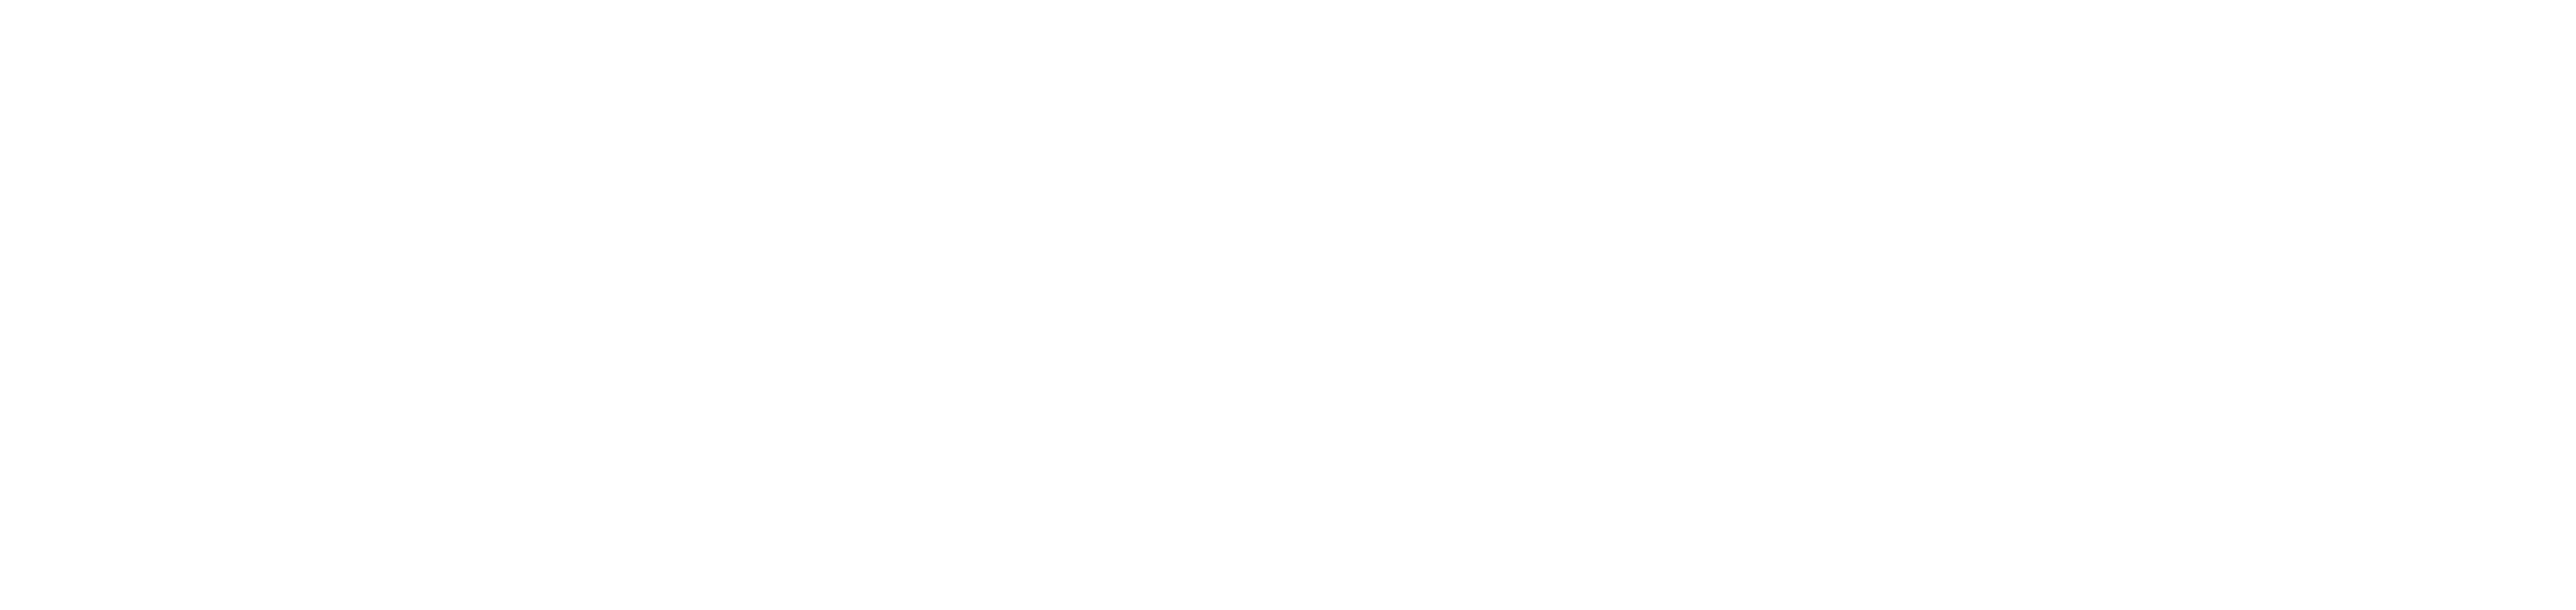 Flowstate logo in white